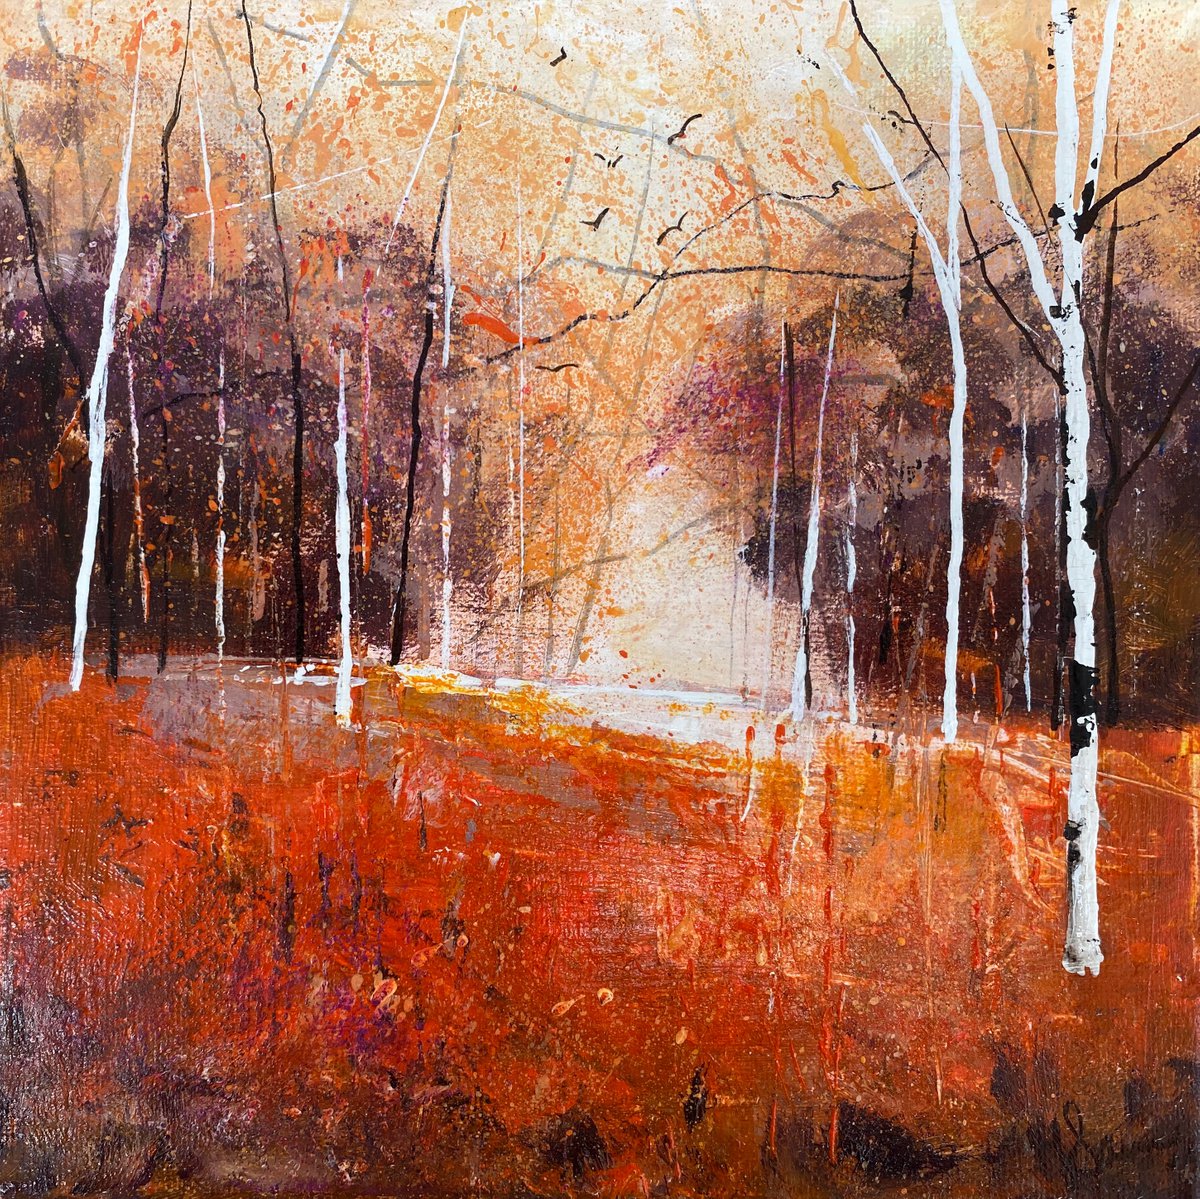 Seasons - Autumn Shades of Orange Woodland by Teresa Tanner